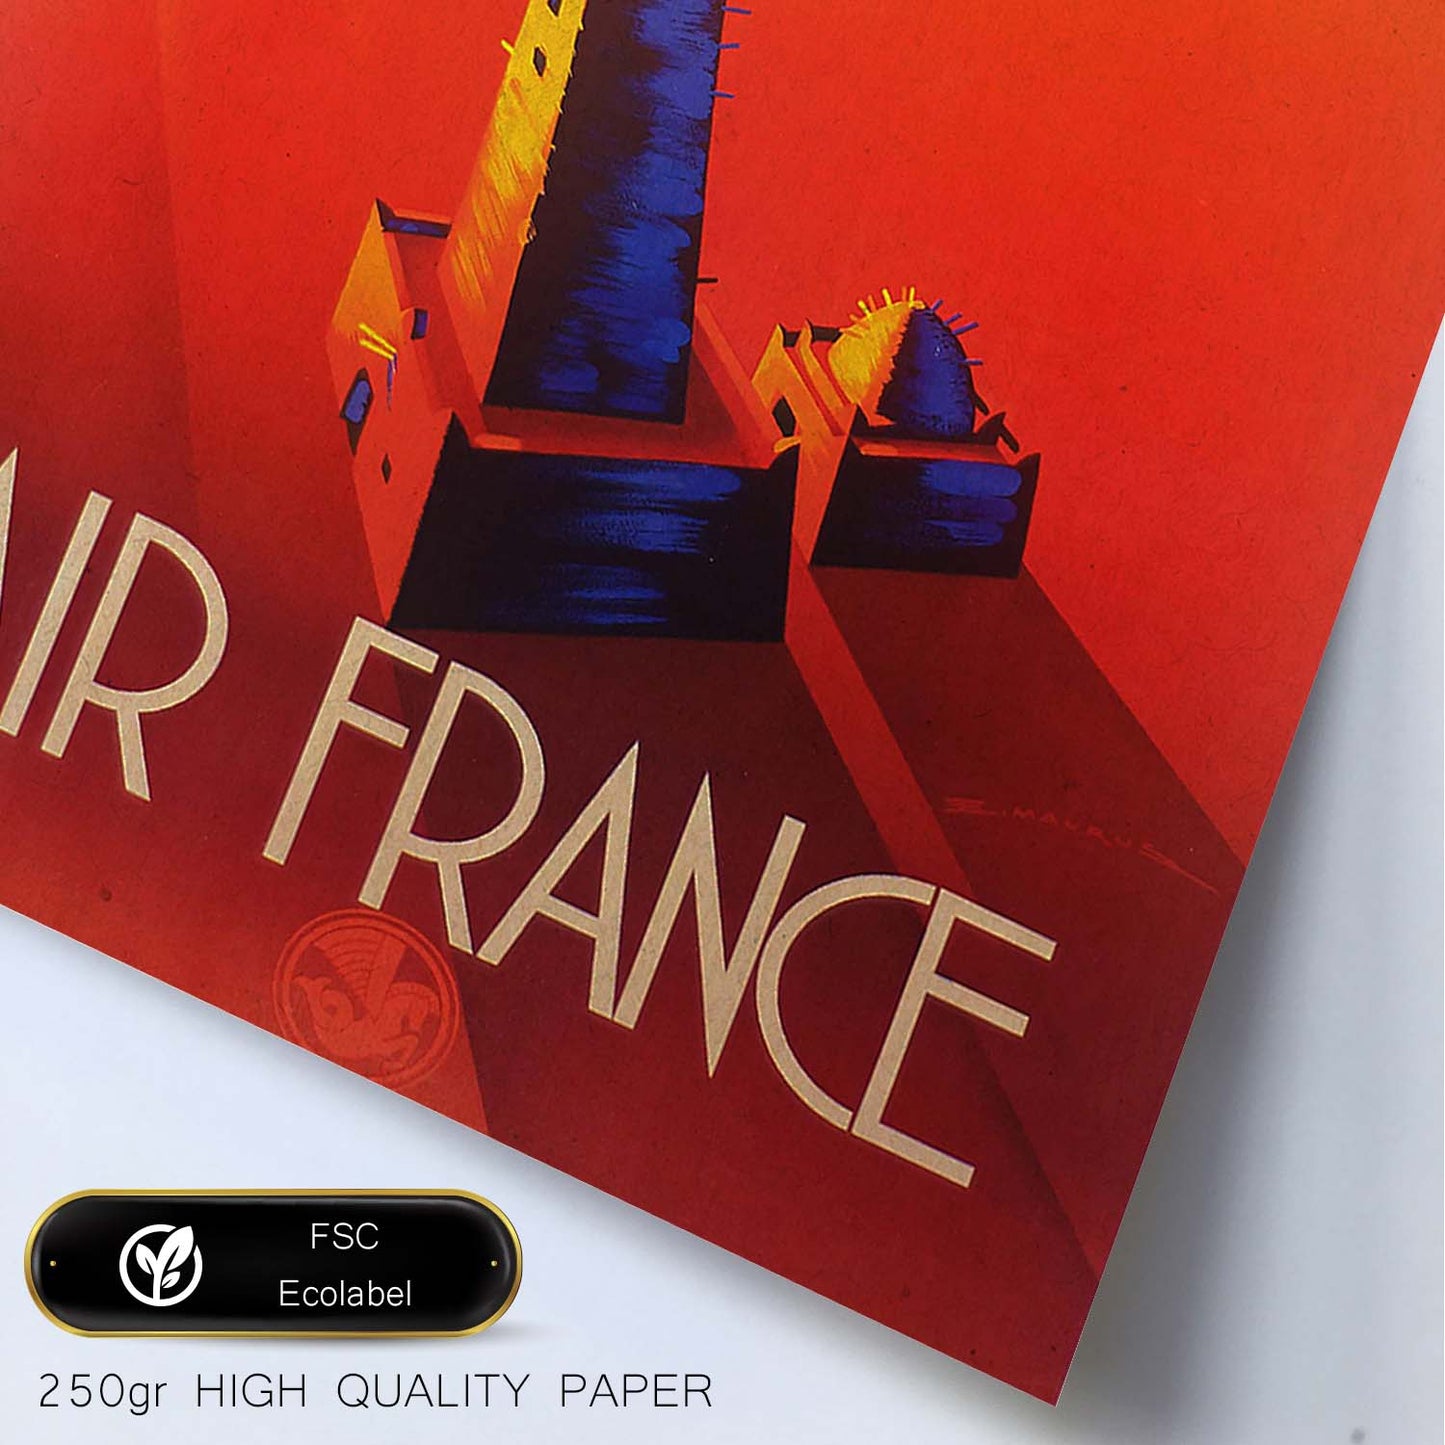 Poster vintage. Cartel vintage de Francia e Italia. Viaja con Air France.-Artwork-Nacnic-Nacnic Estudio SL